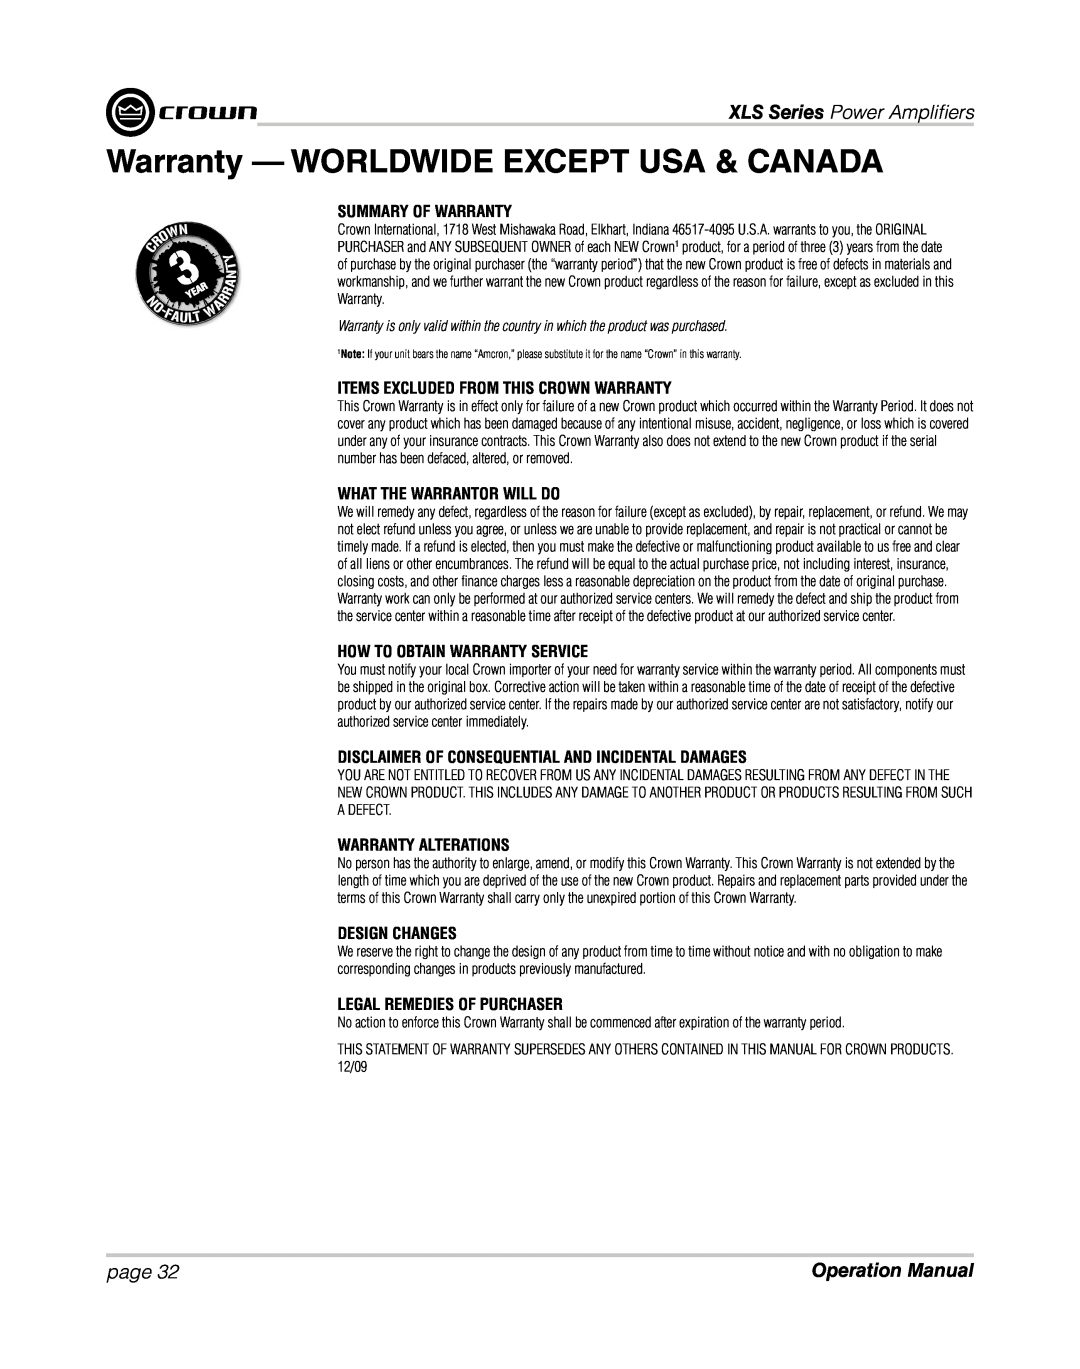 Crown XLS 1000 Warranty - WORLDWIDE EXCEPT USA & CANADA, XLS Series Power Ampliﬁ ers, page, Summary Of Warranty 